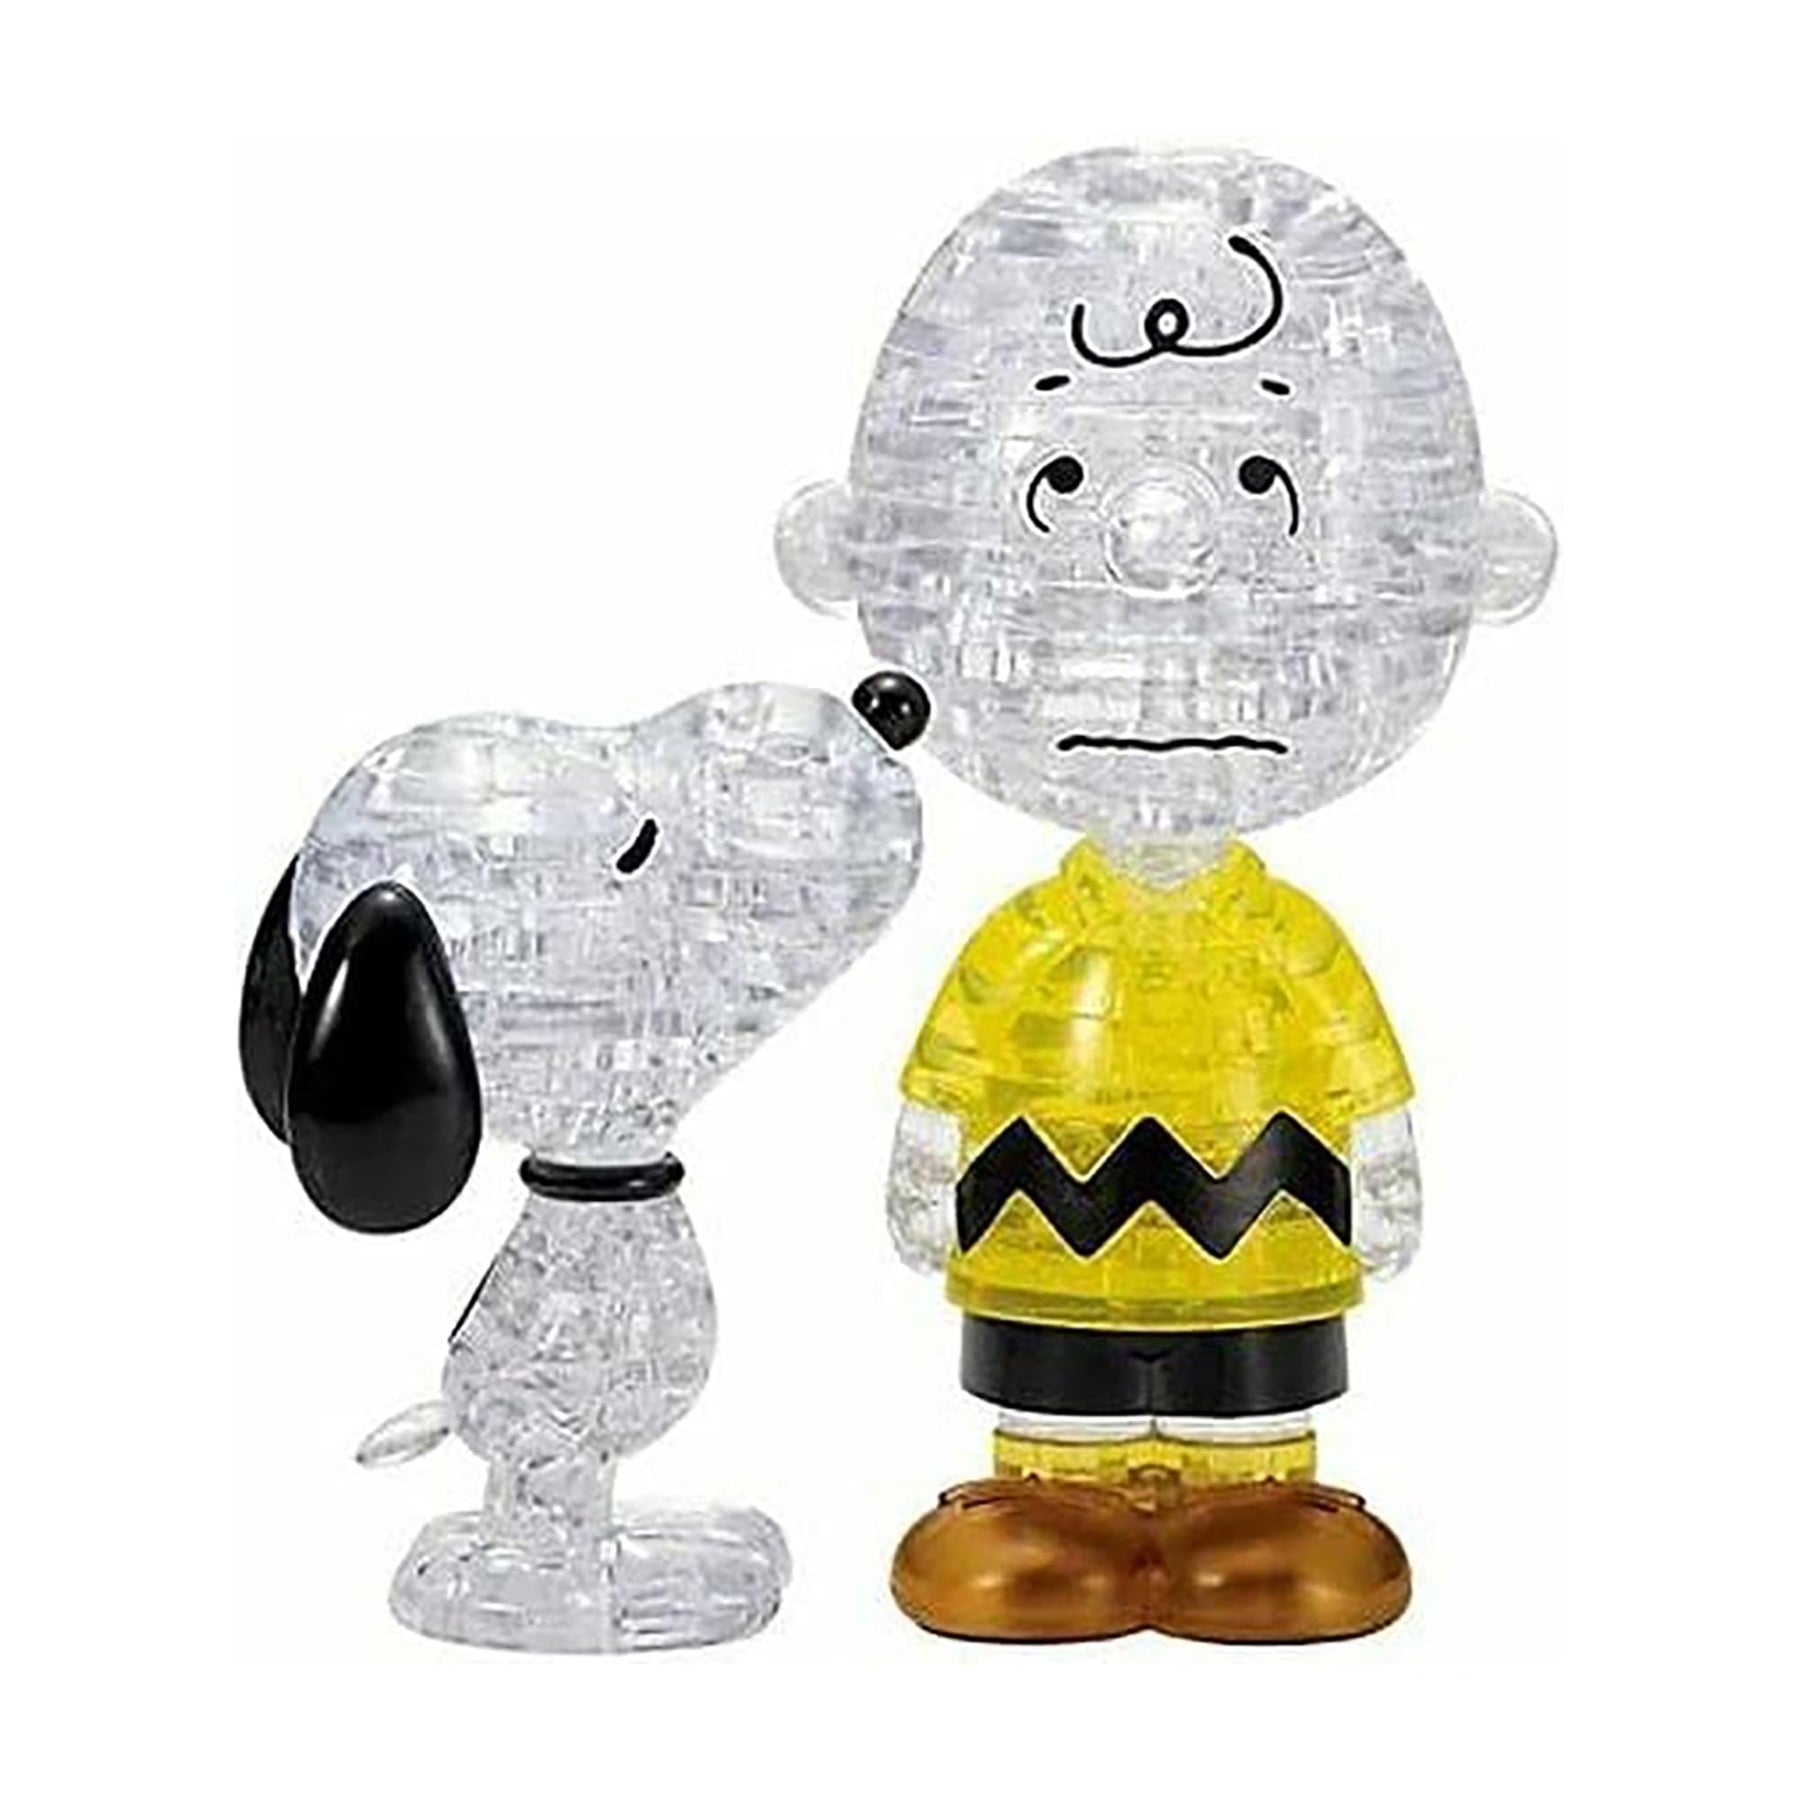 Peanuts Snoopy & Charlie Brown 3D Crystal Puzzle